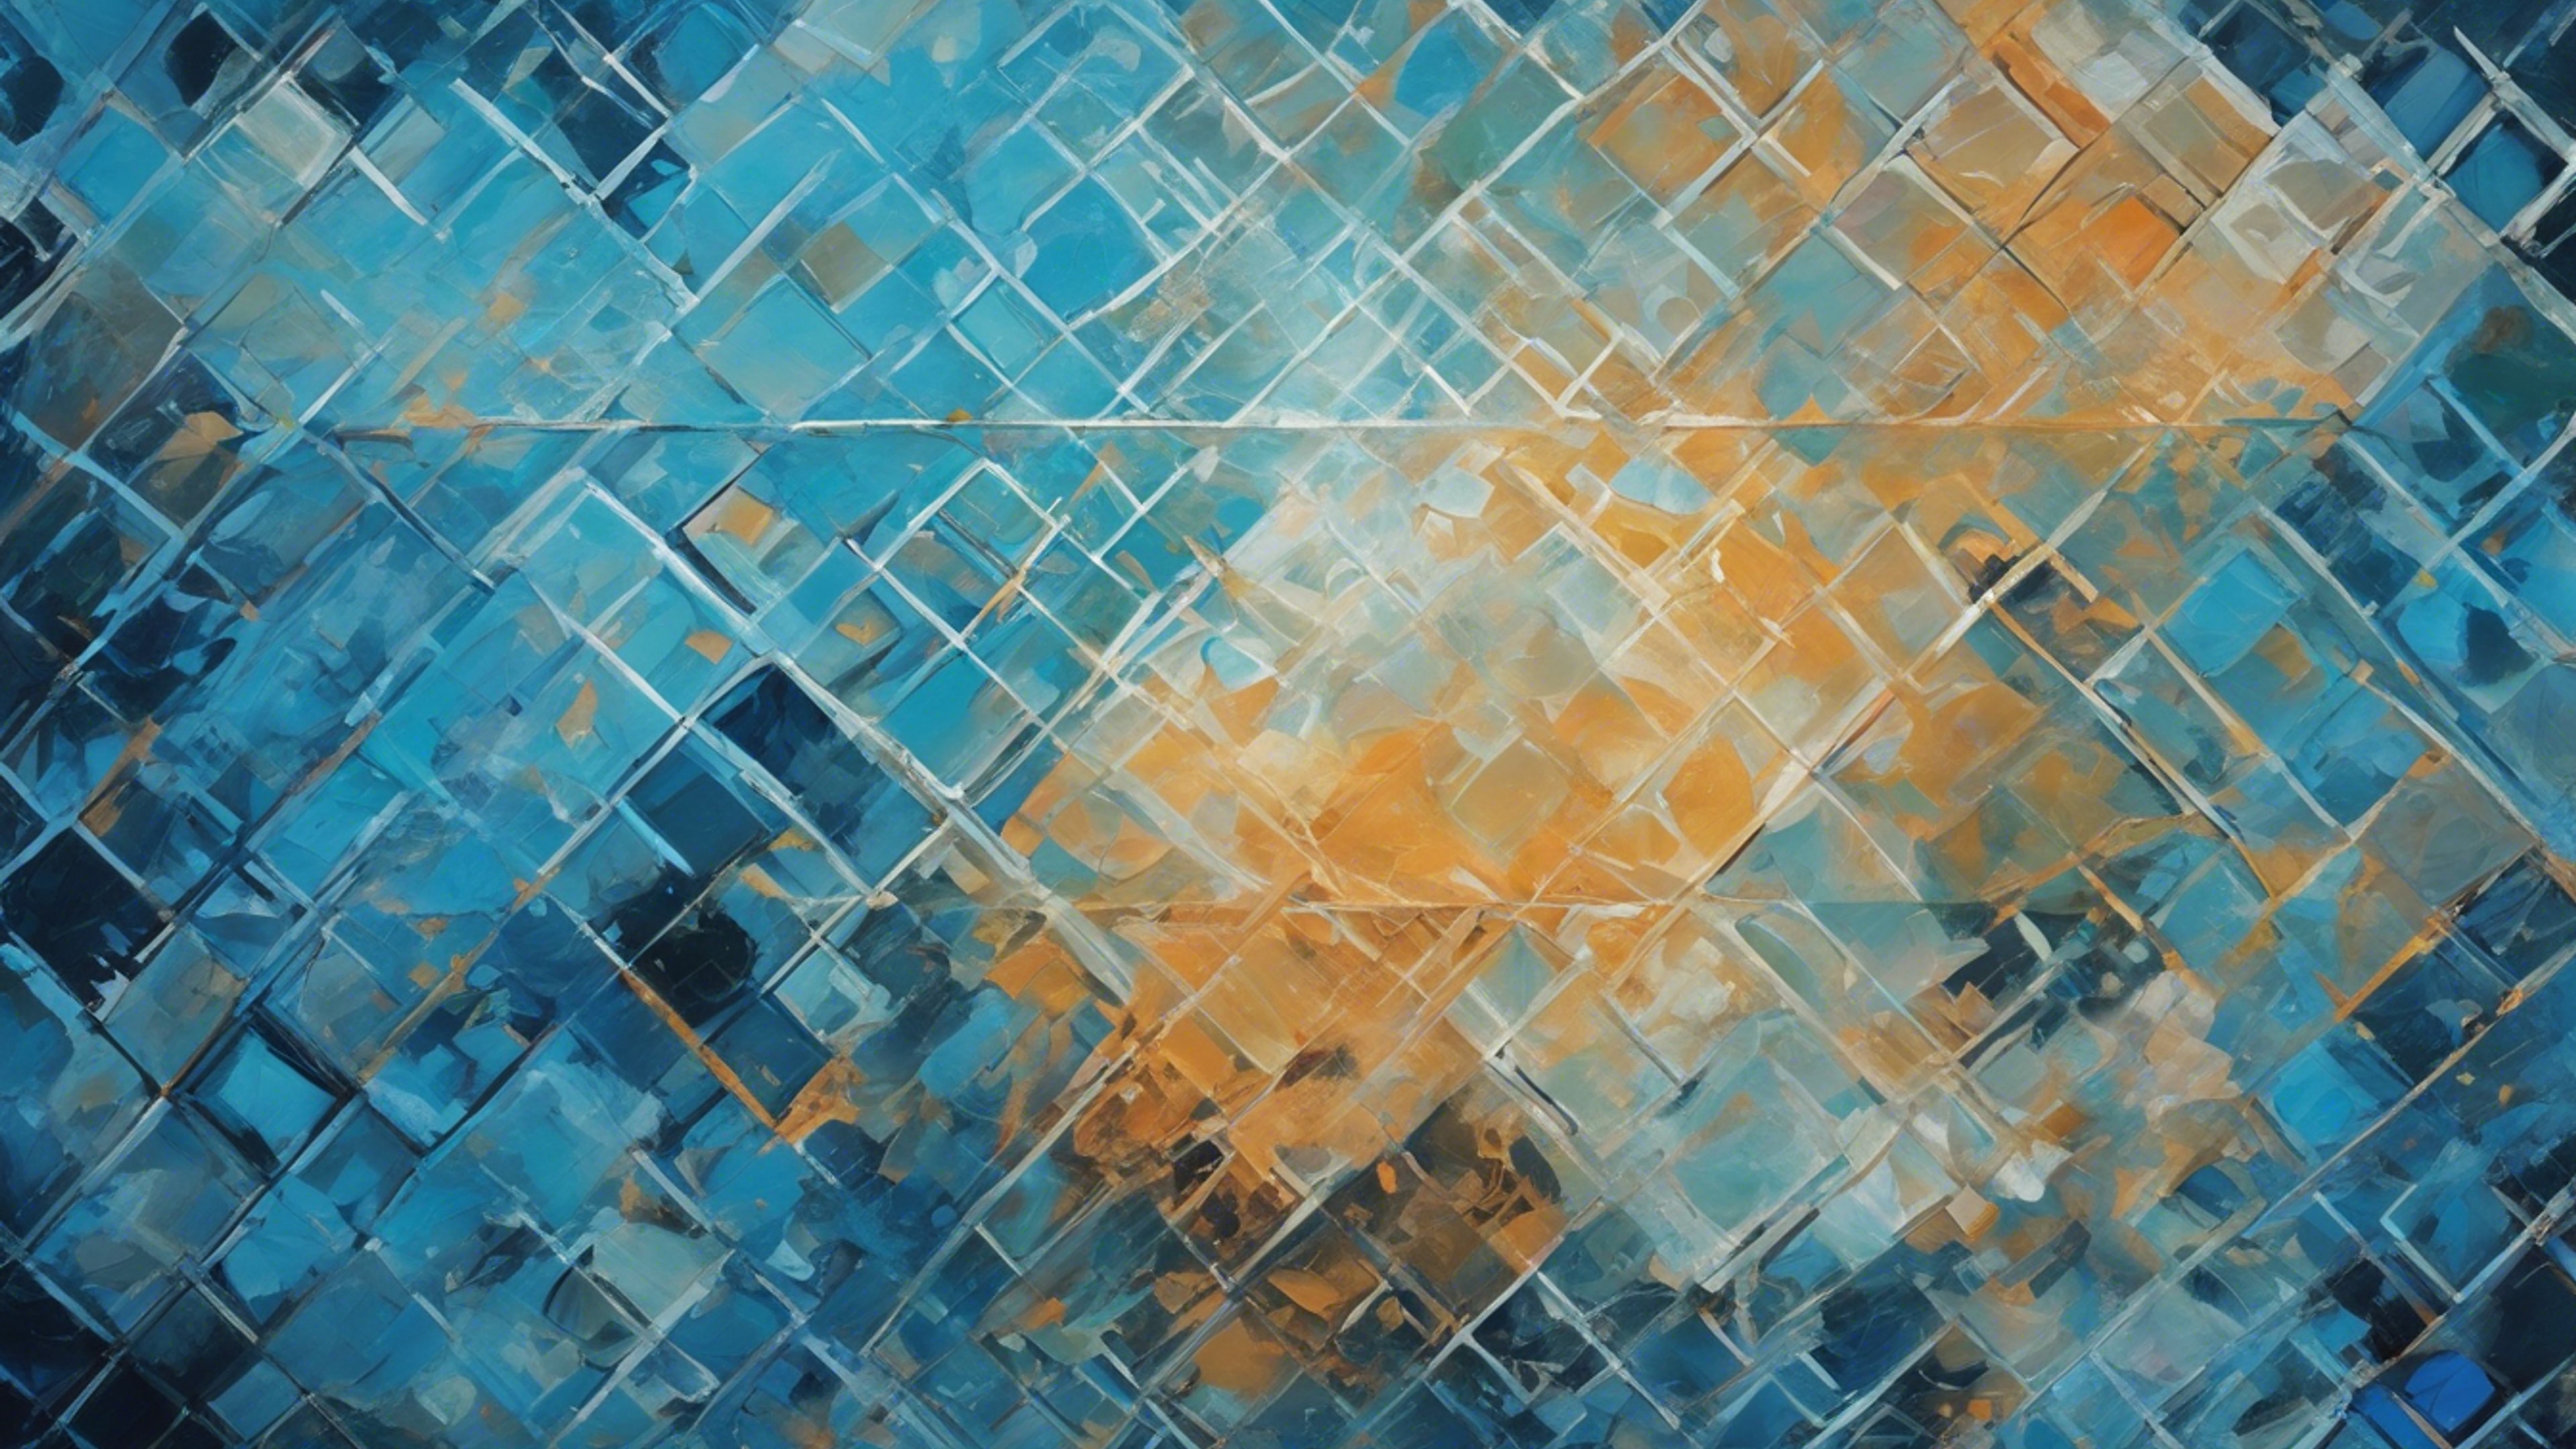 A cool blue geometric abstract painting Tapeta[ac7eea7ca87f45839e46]